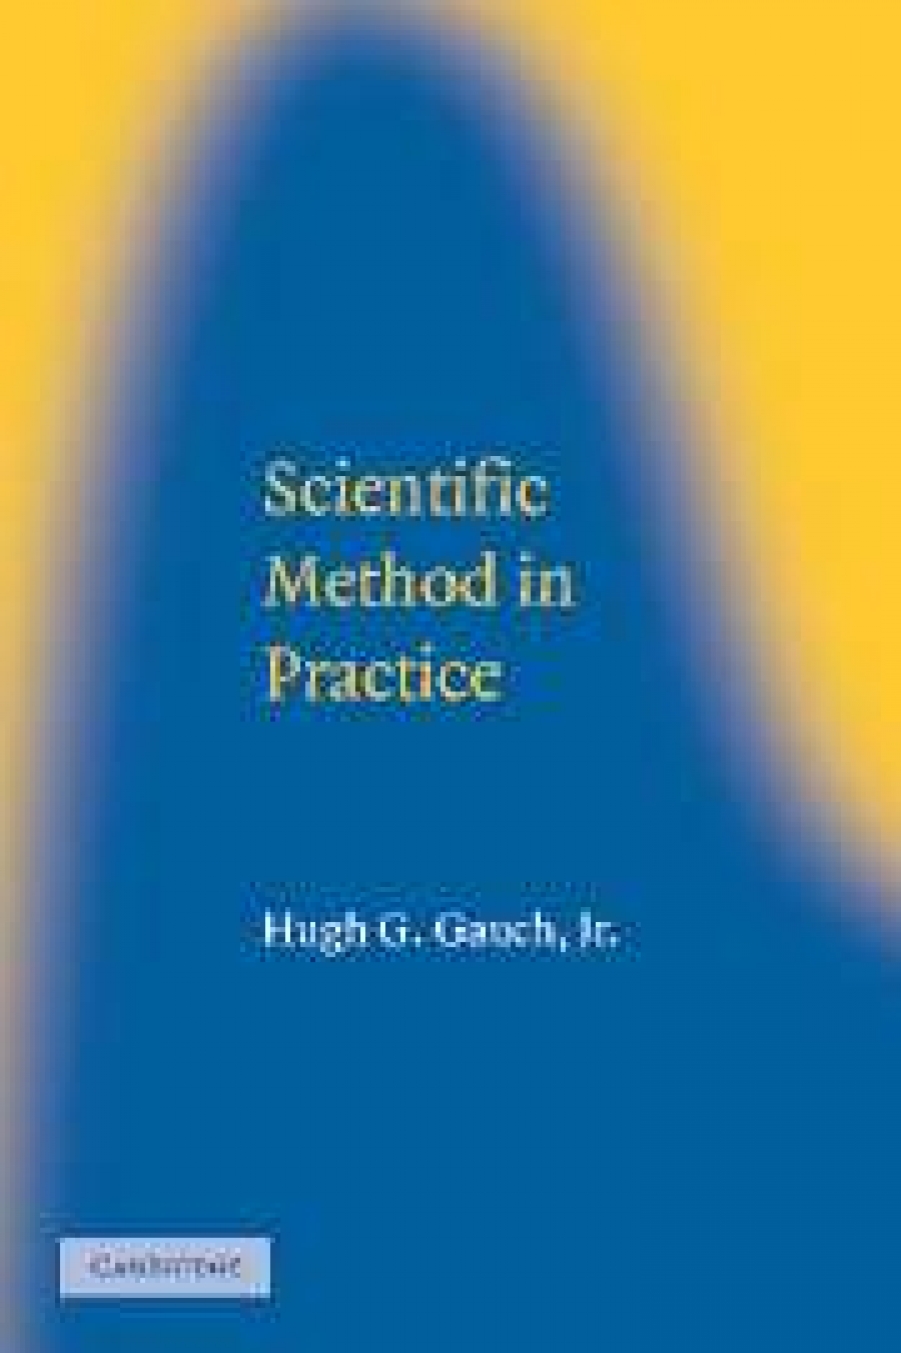 Hugh G. Gauch Jr Scientific Method in Practice 